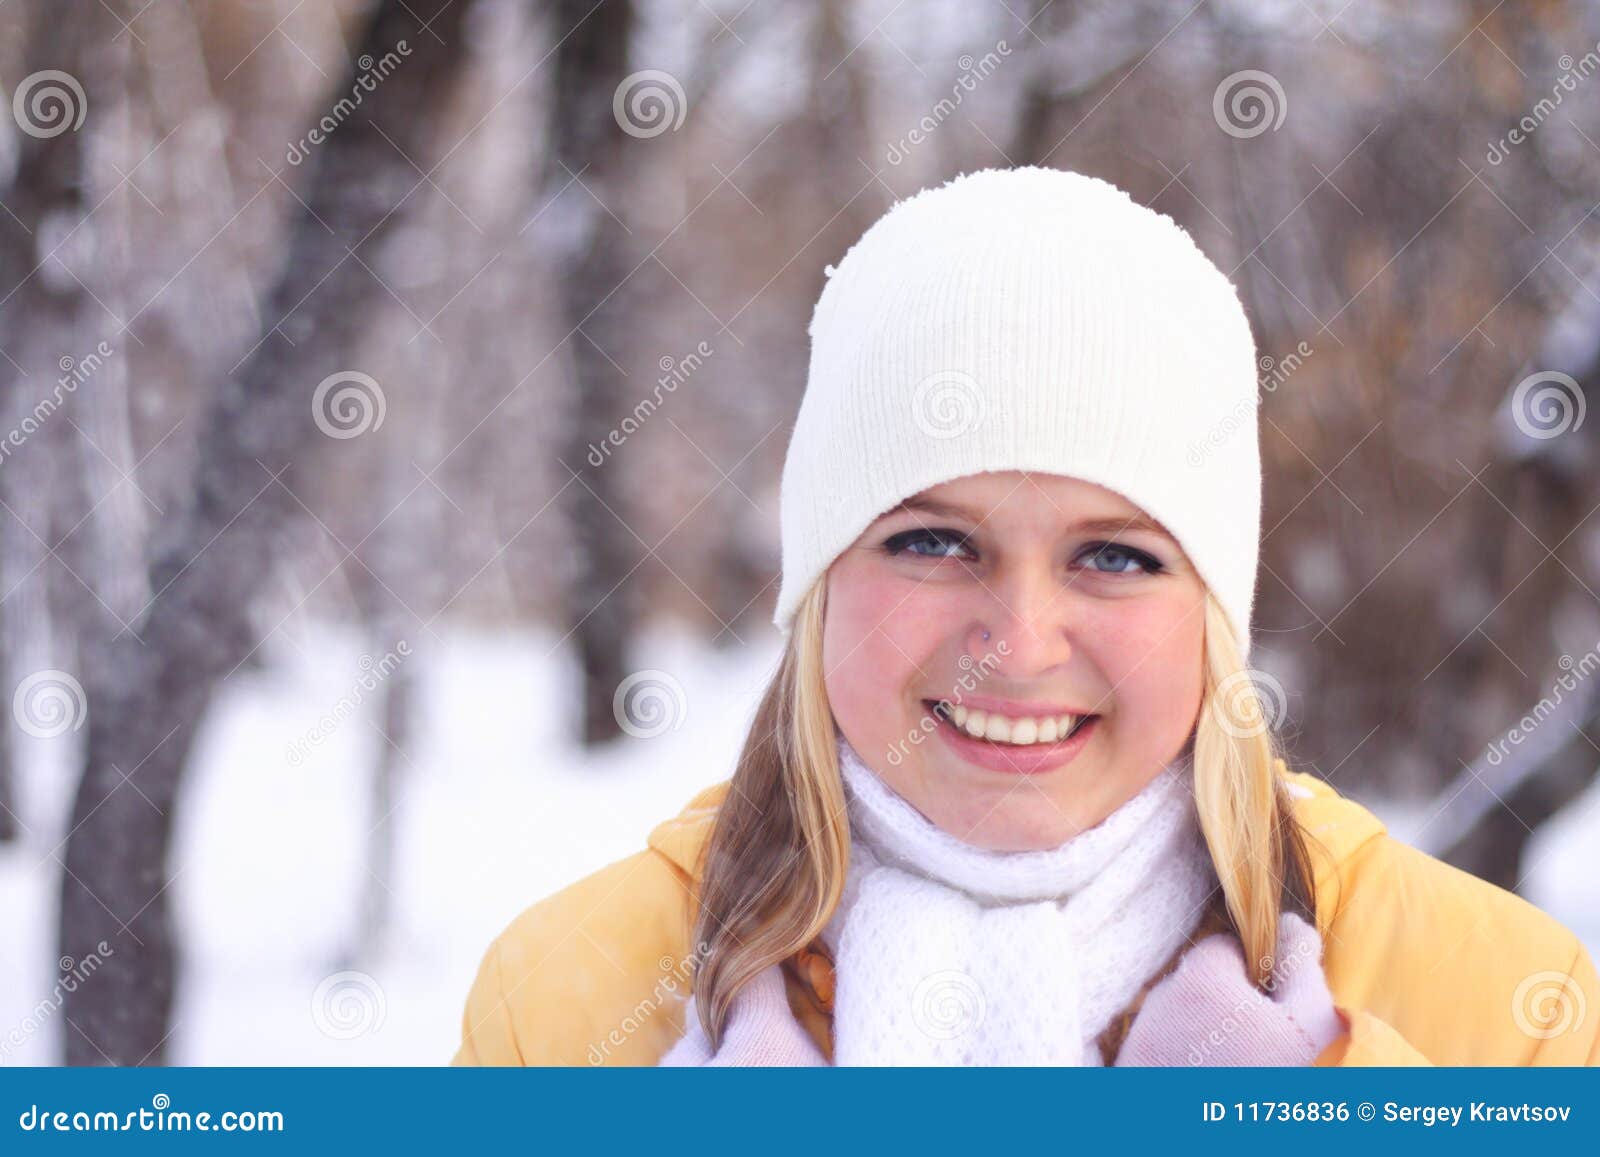 Happy girl stock photo. Image of human, laughing, caucasian - 11736836